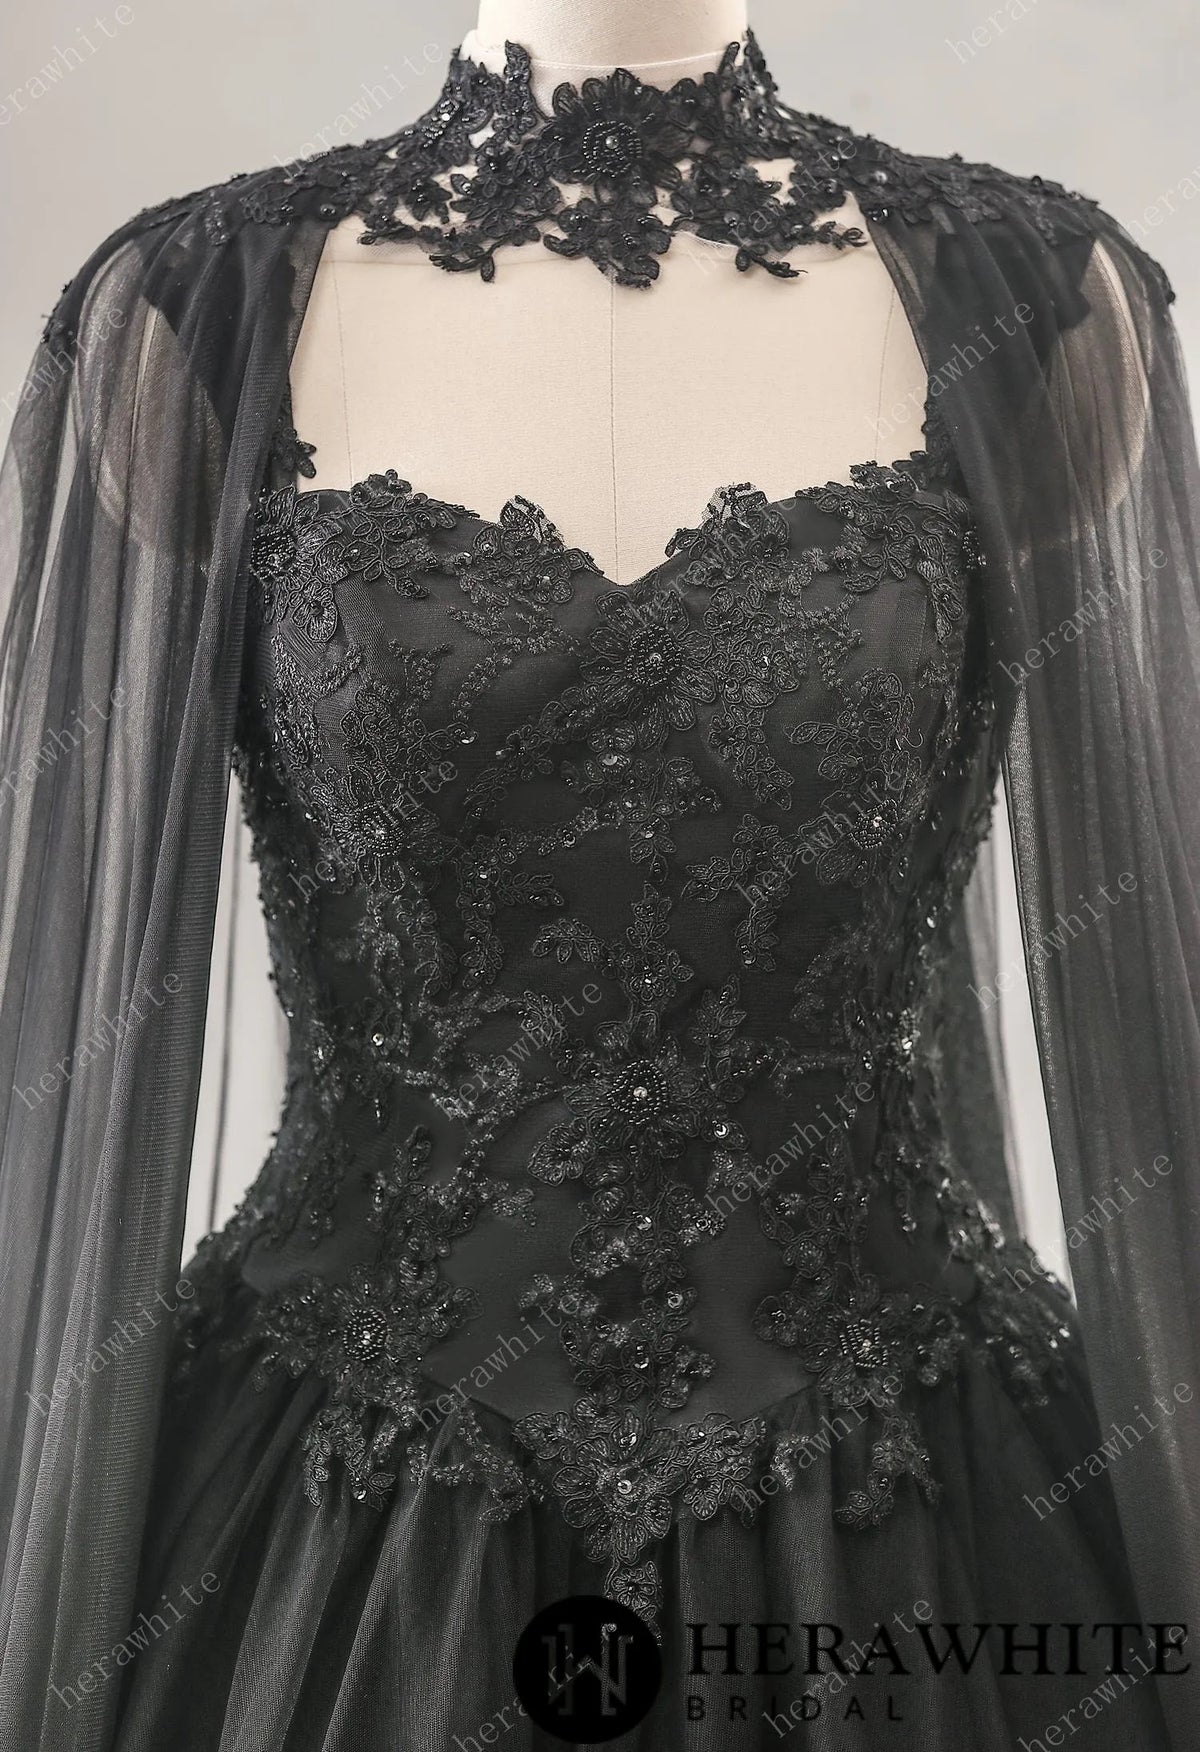 Gothic Black Modern Wedding Dress Sleeveless Bridal Gown Aline Sweetheart Neckline Corset Lace Up Back Wide Straps Detachable Cape